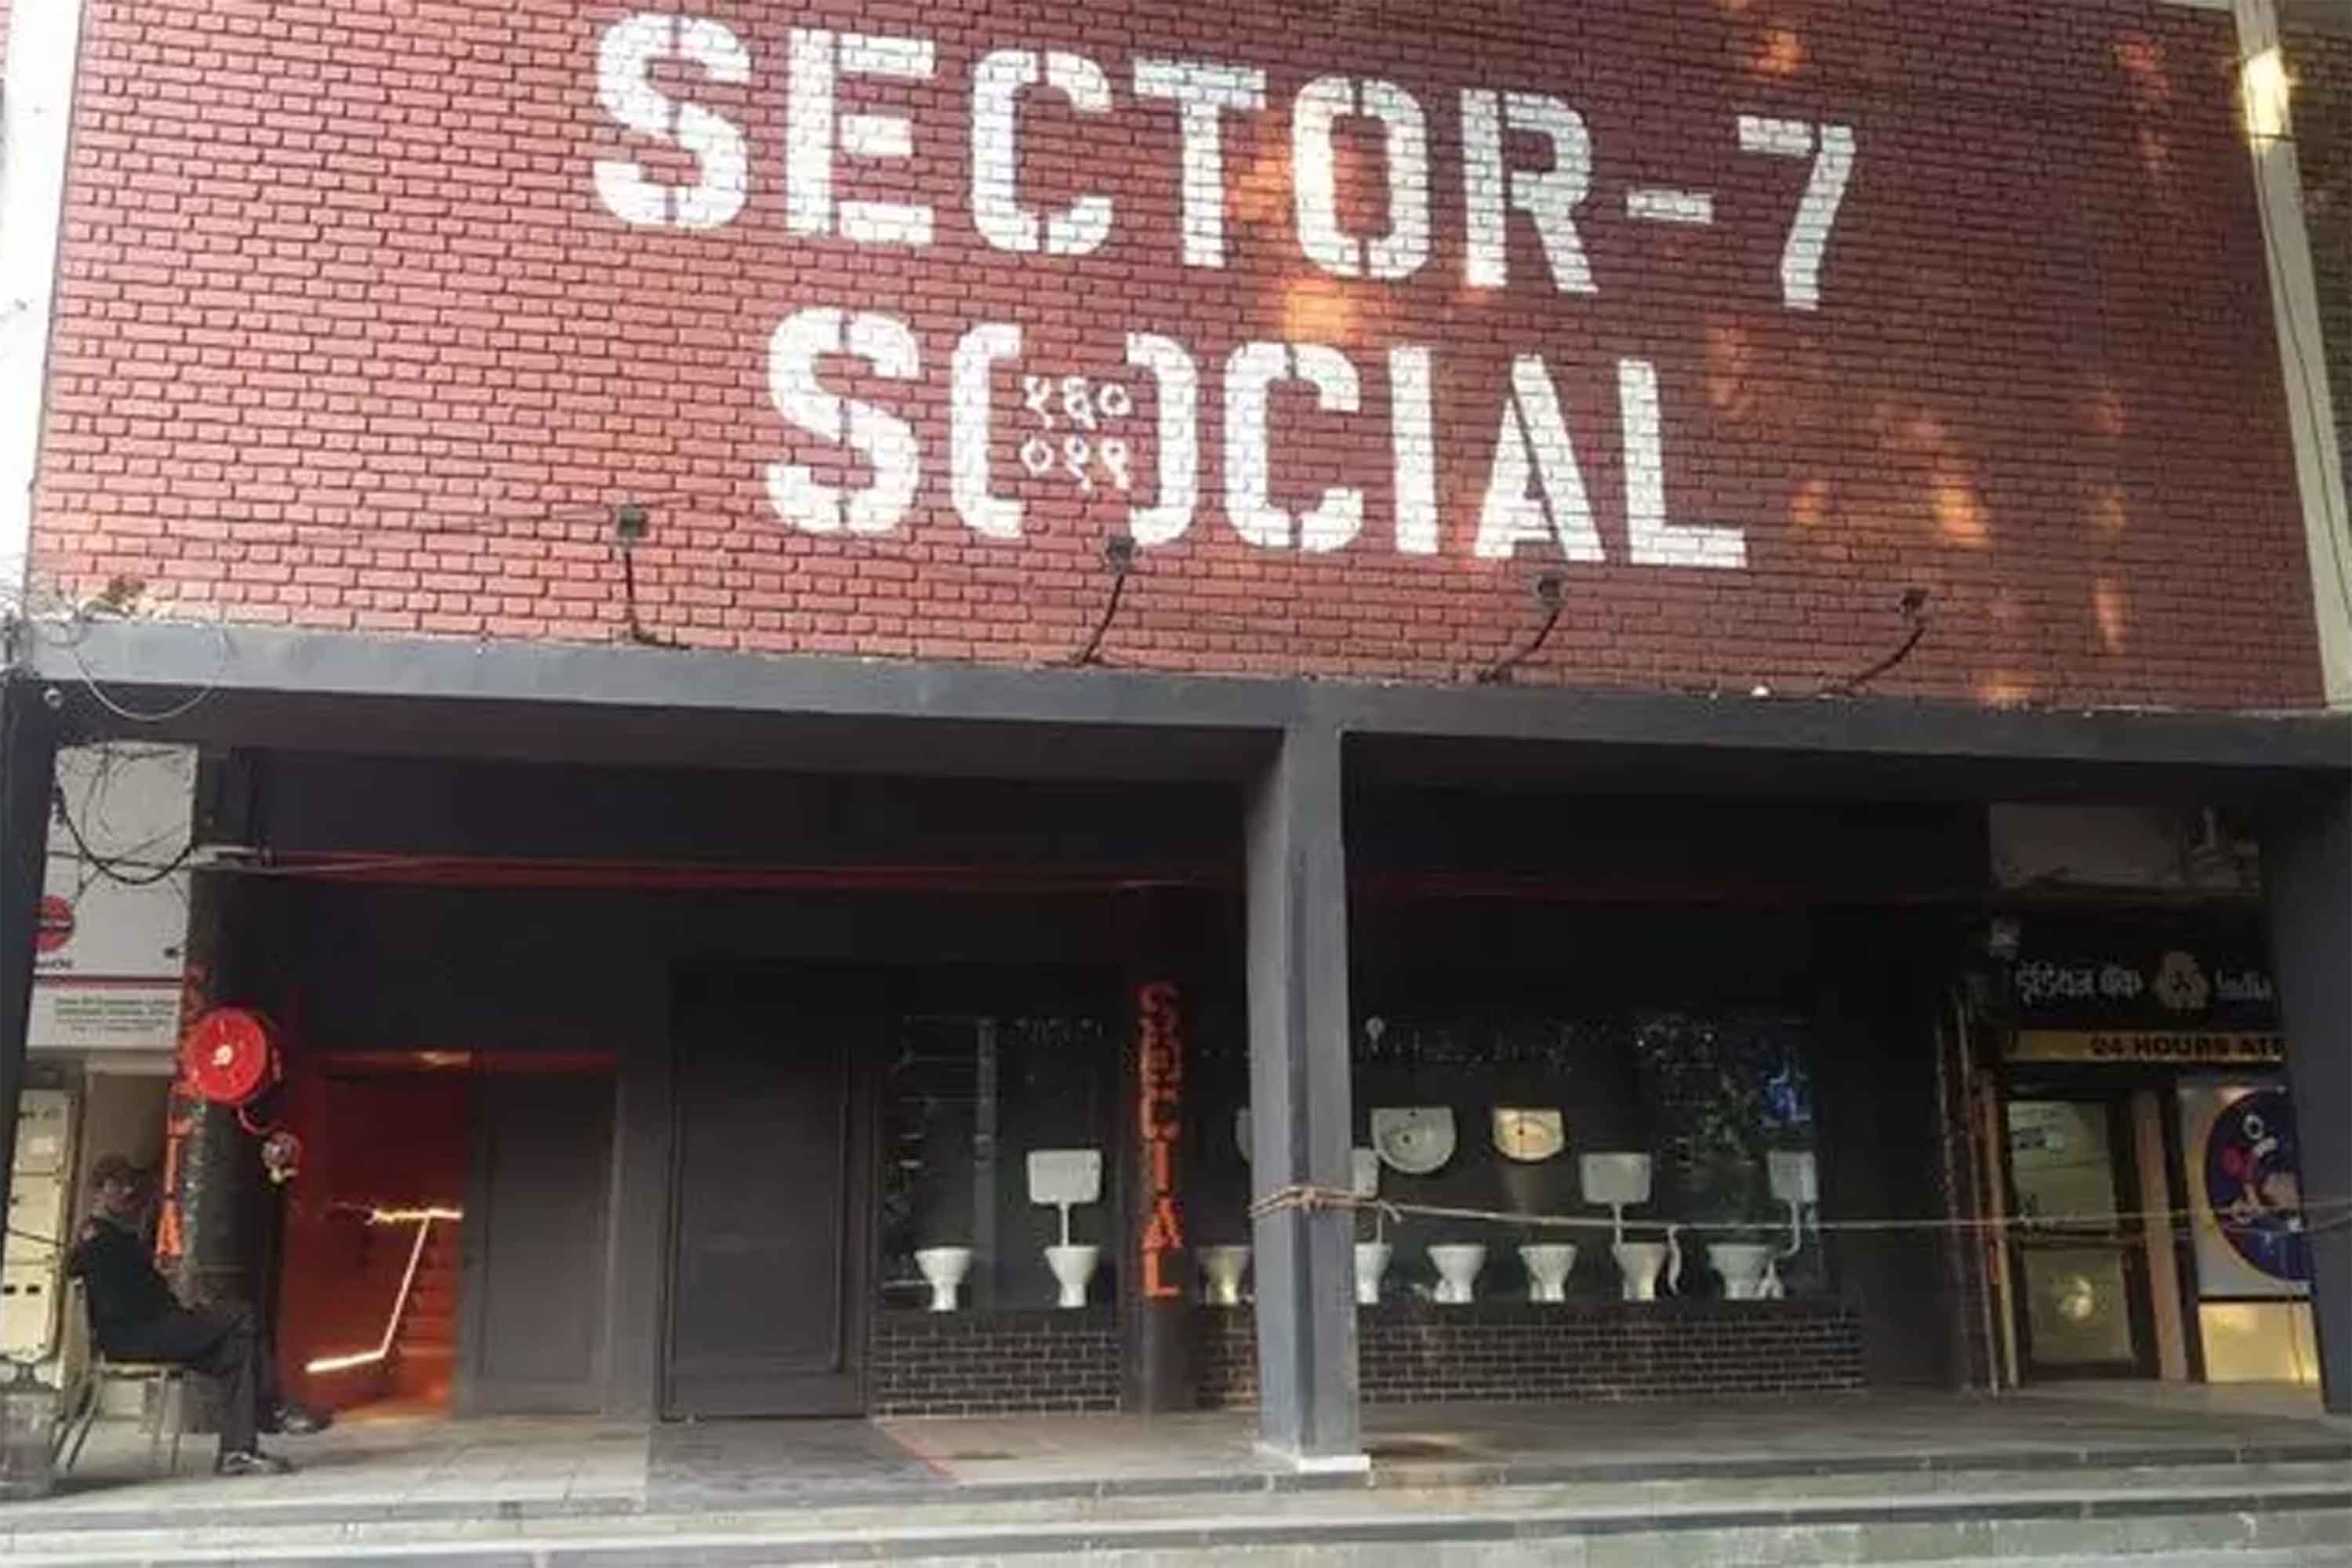 Sector 7 Social